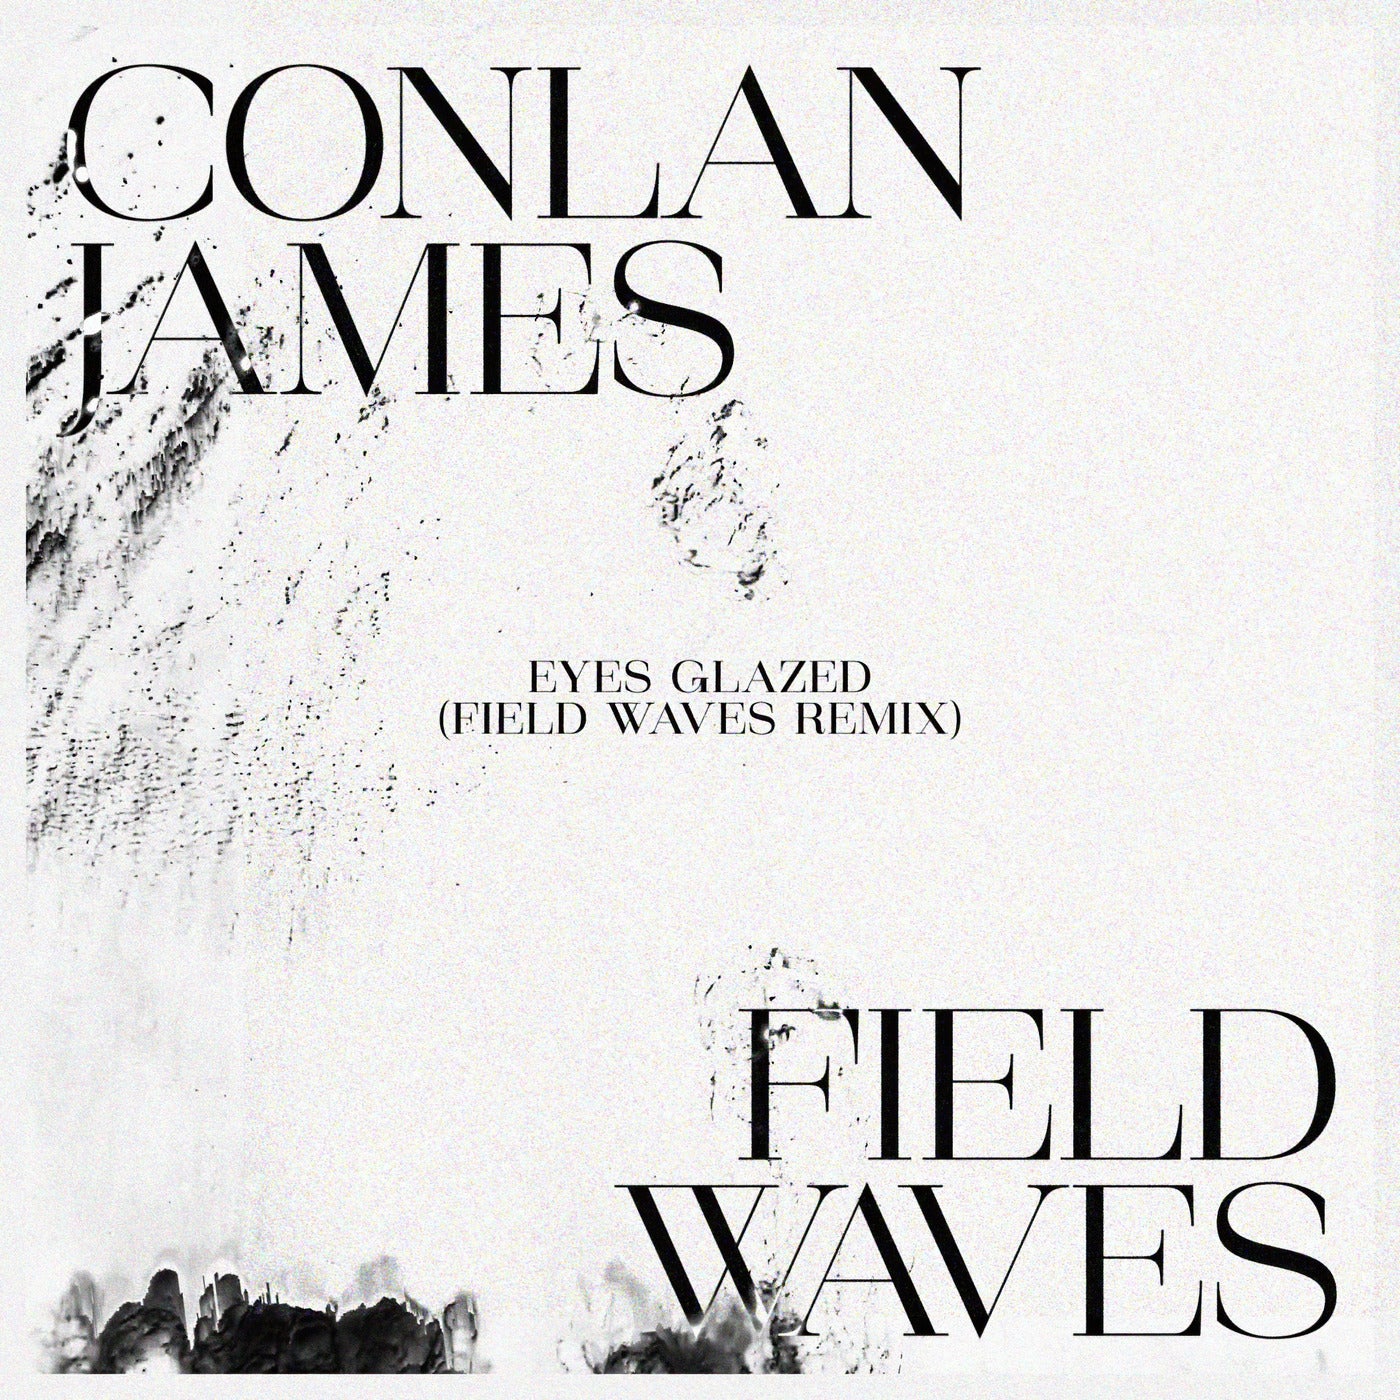 Eyes Glazed - Field Waves Remix